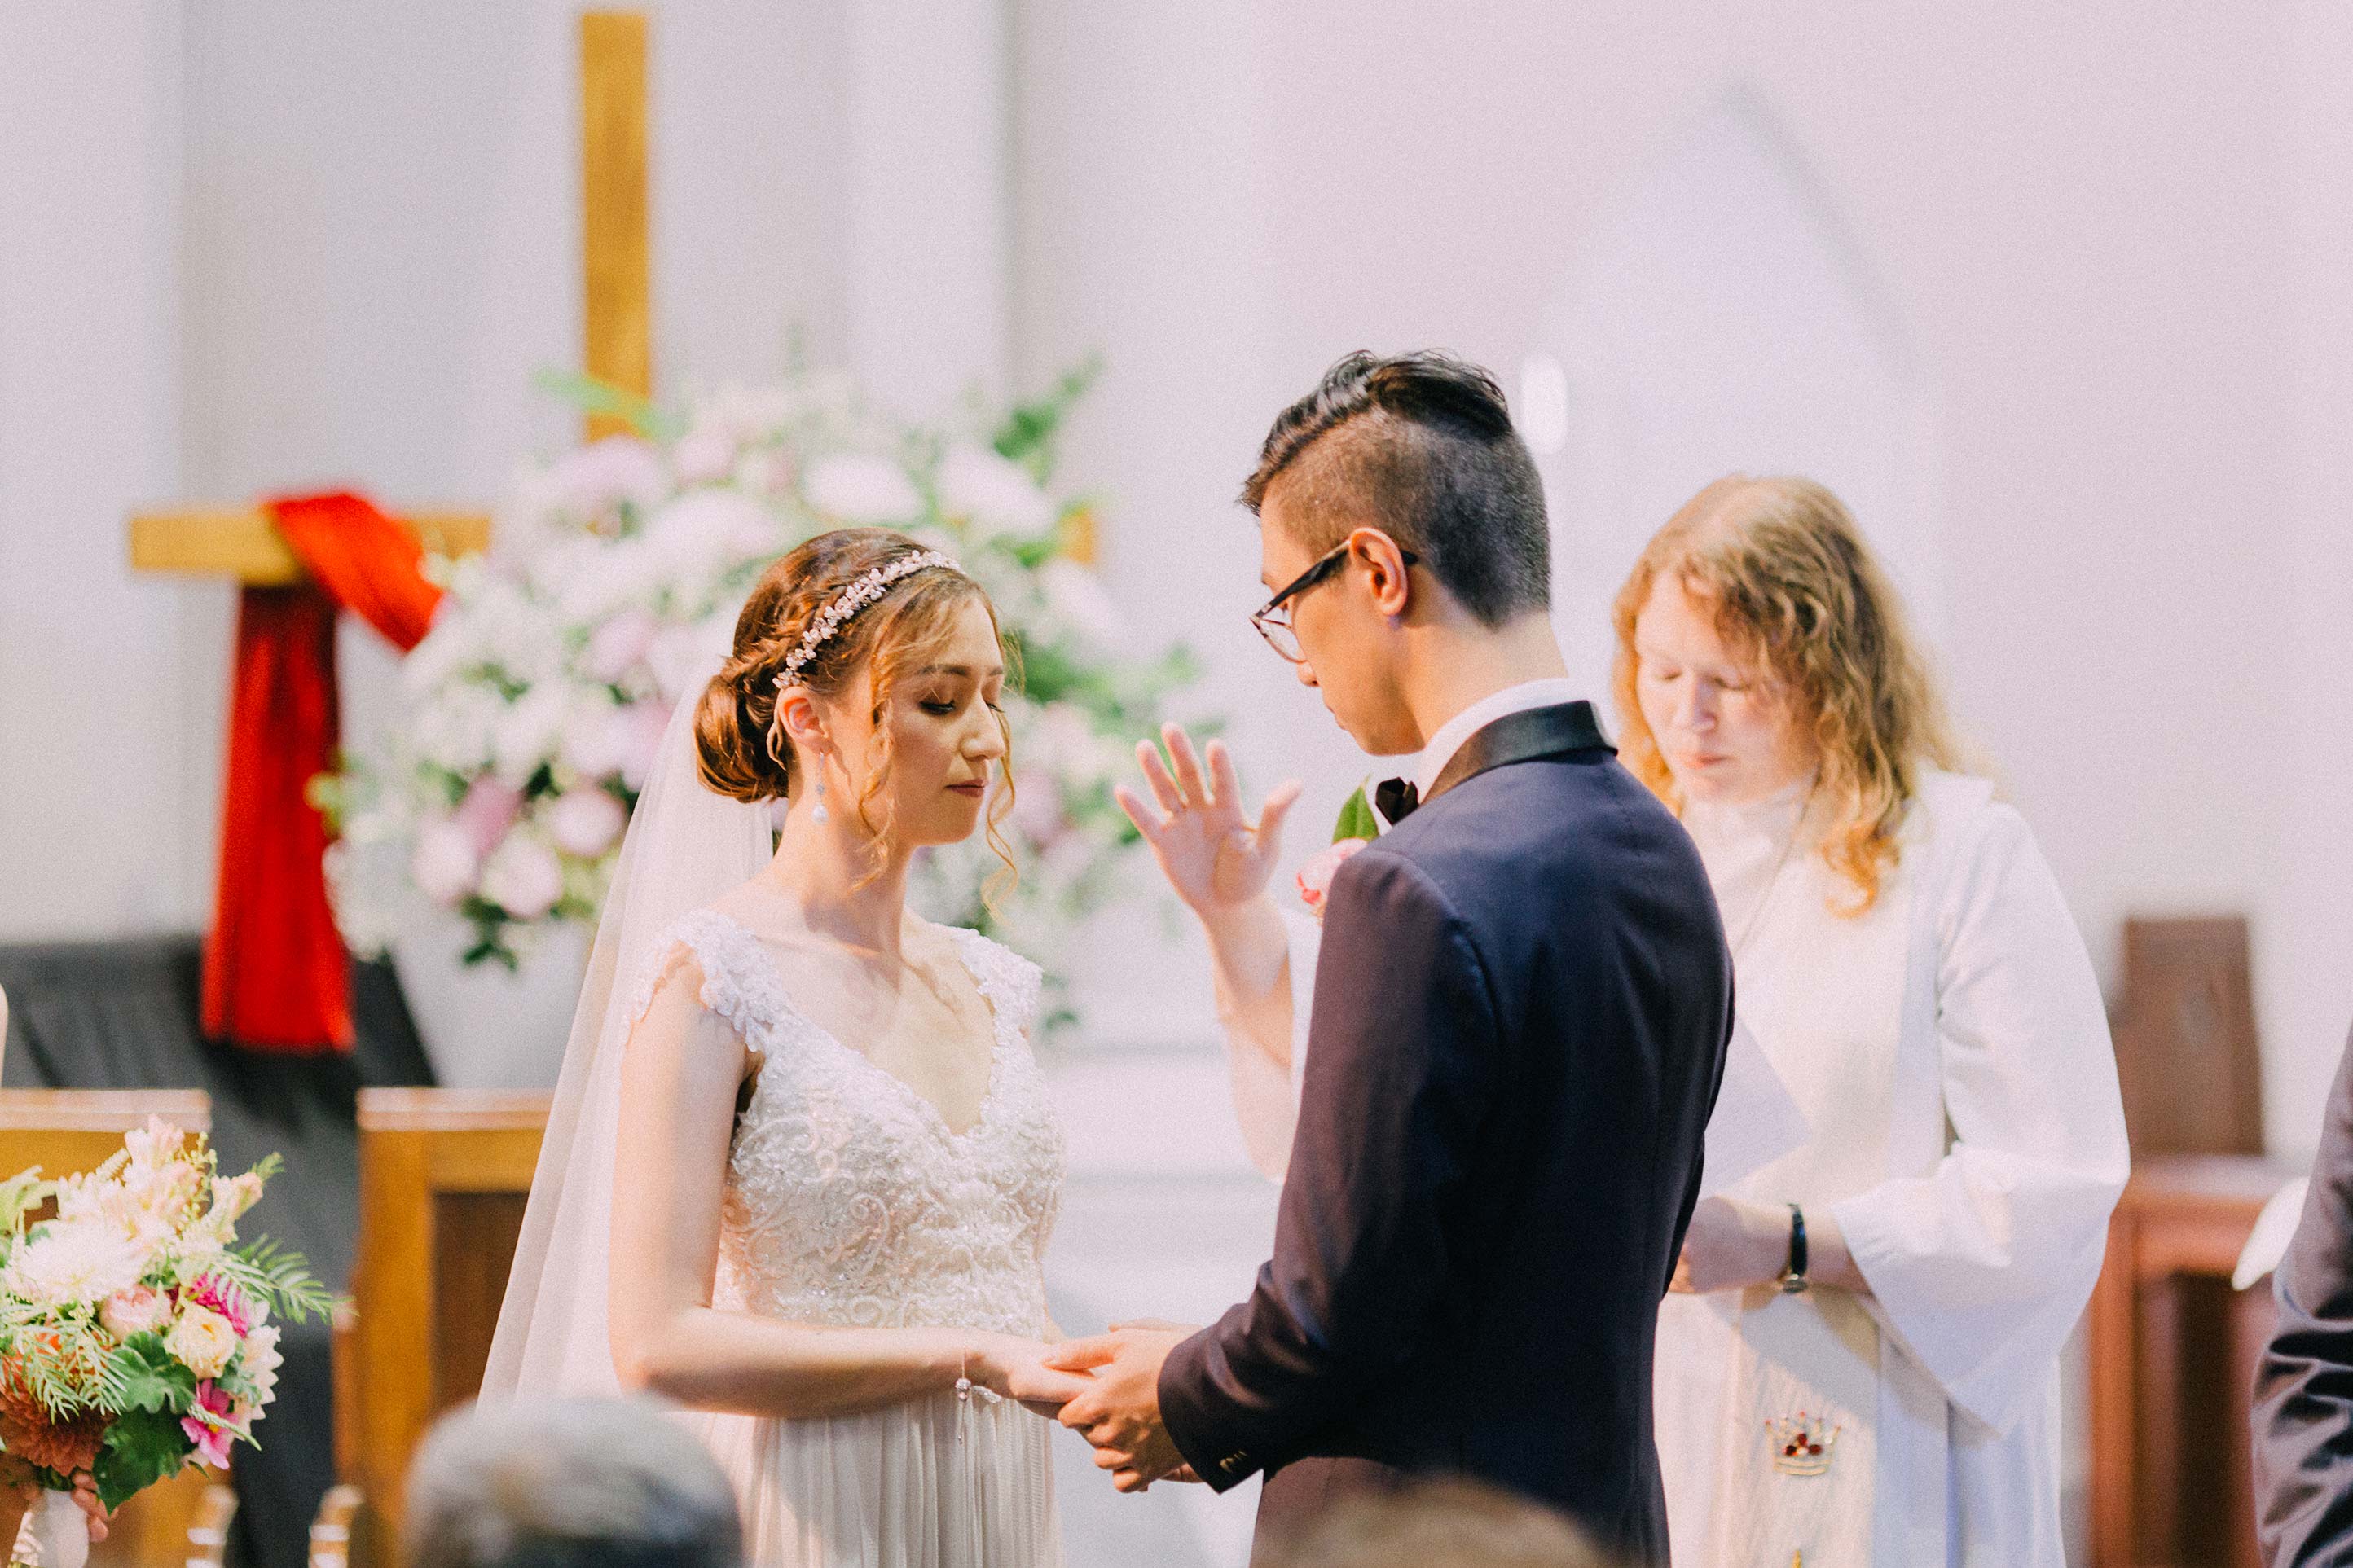 Melbourne-caufield-north-wedding-church-ceremony